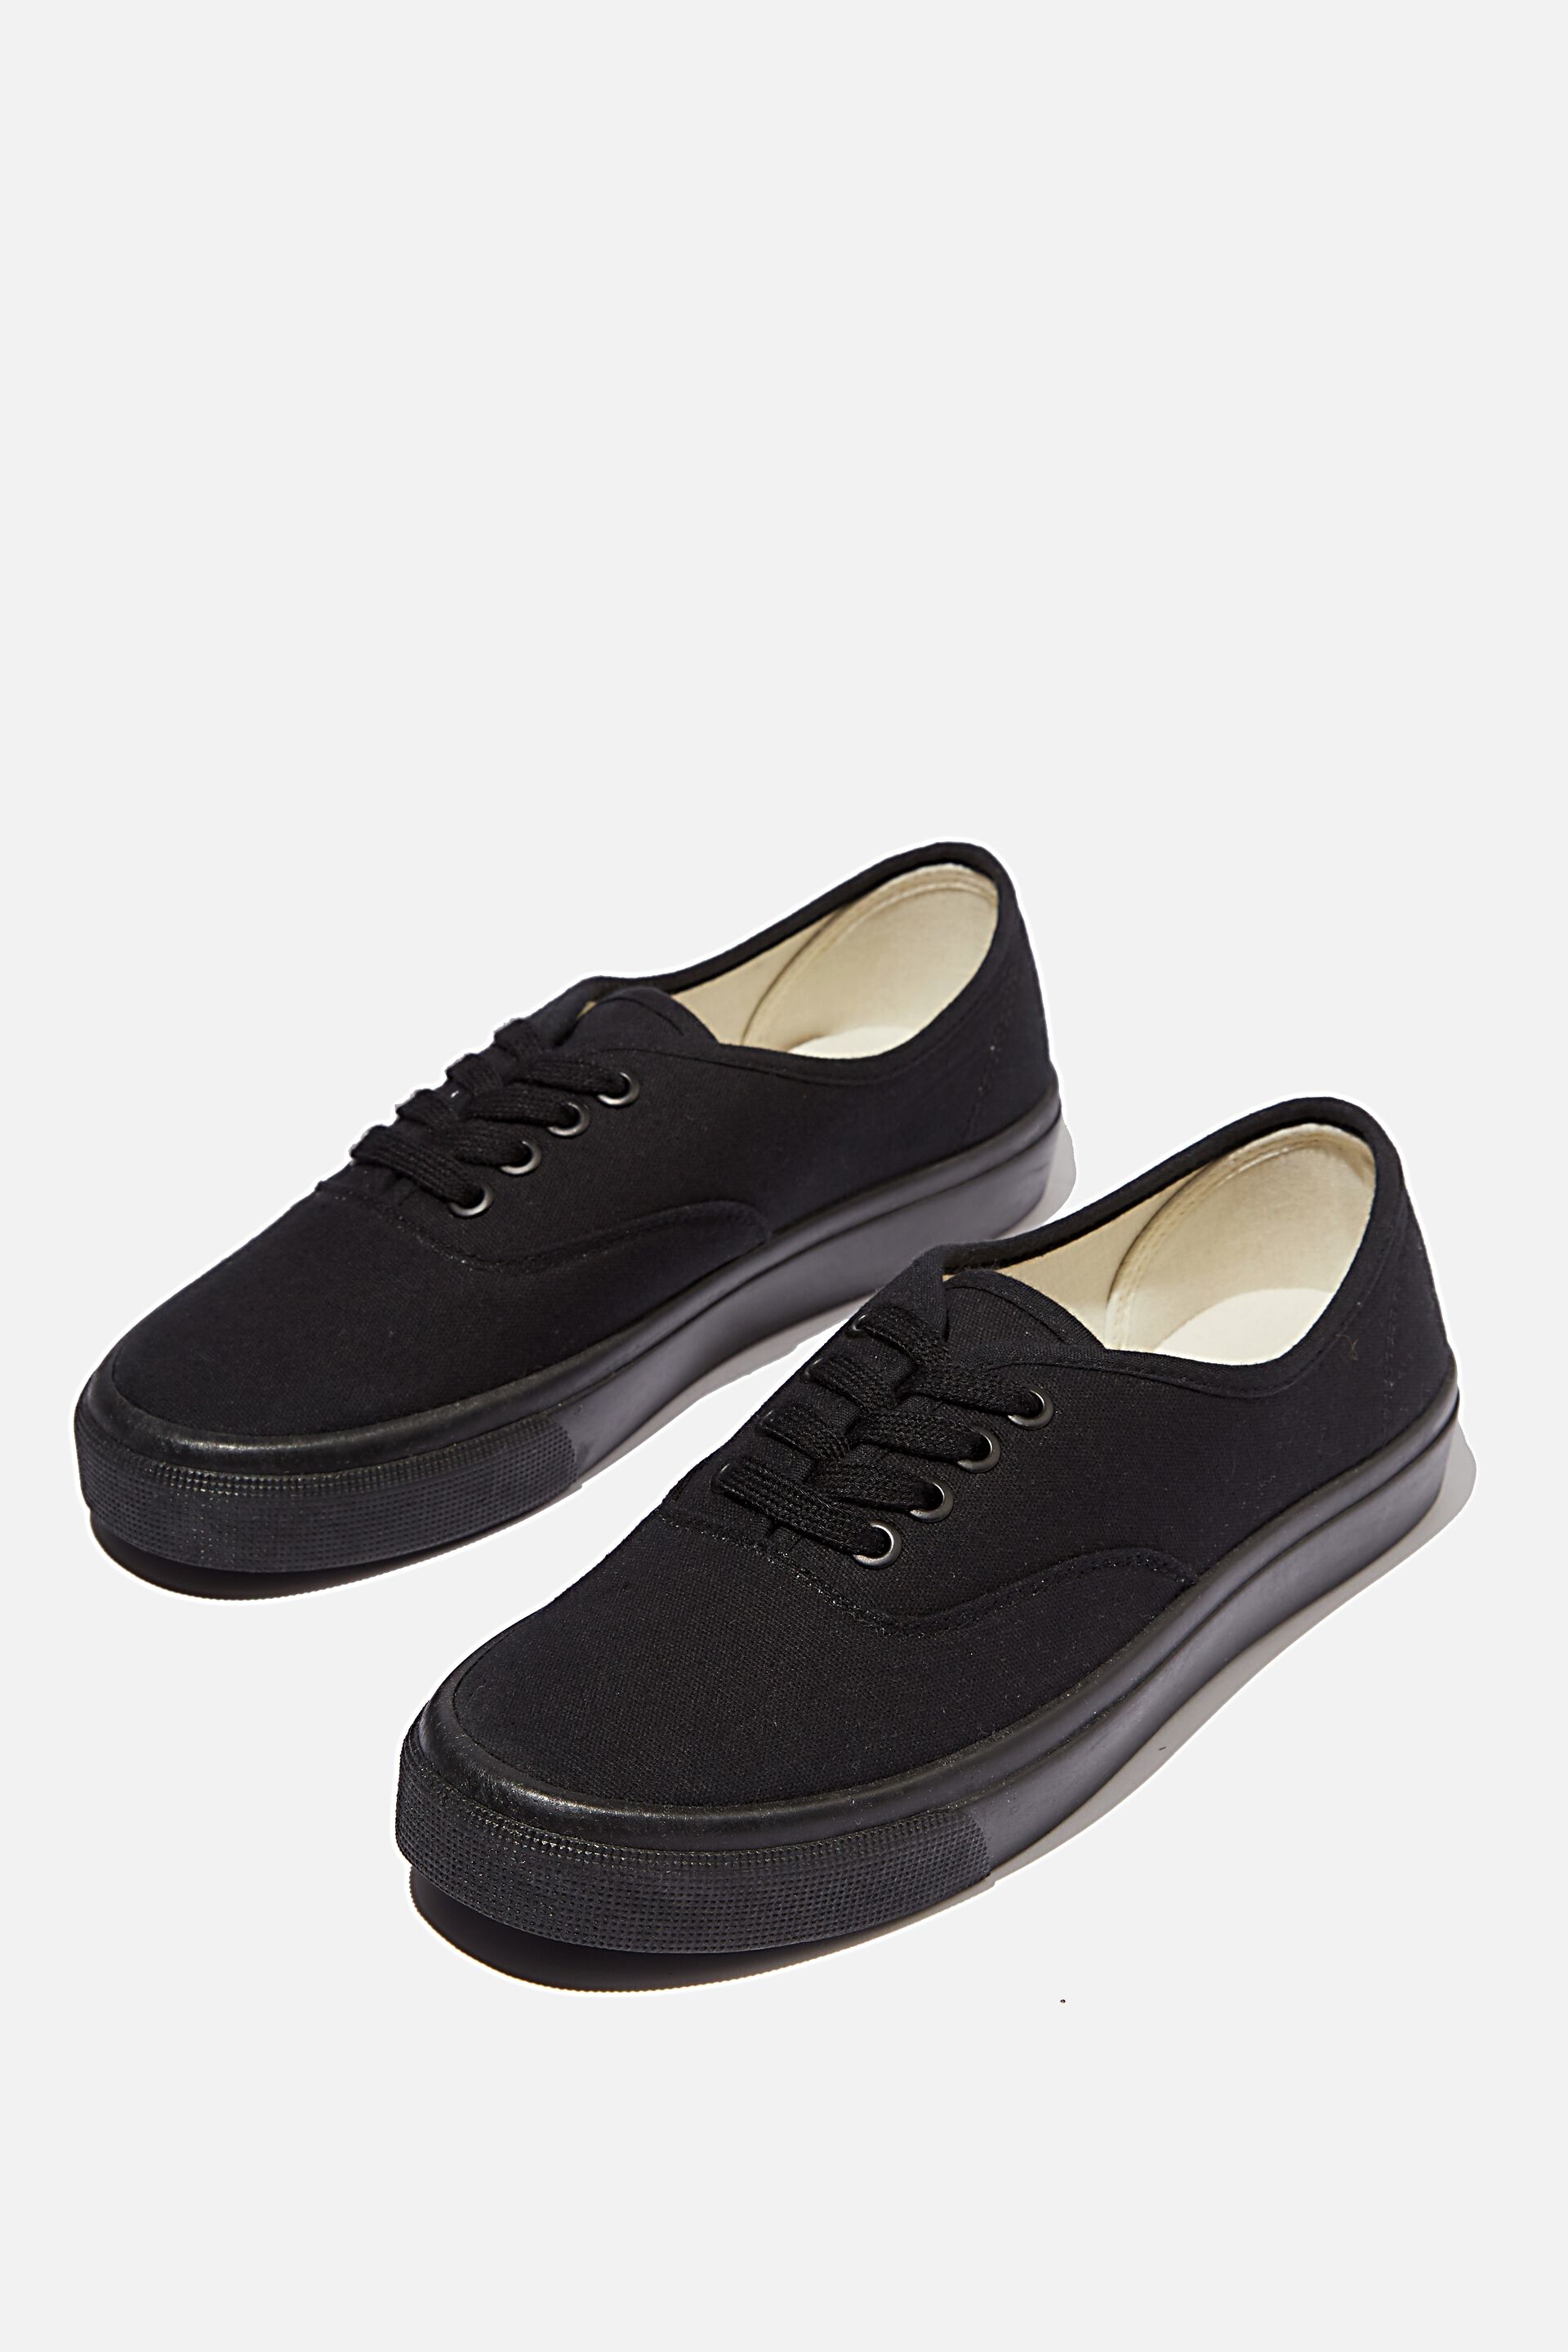 black plimsoll shoes